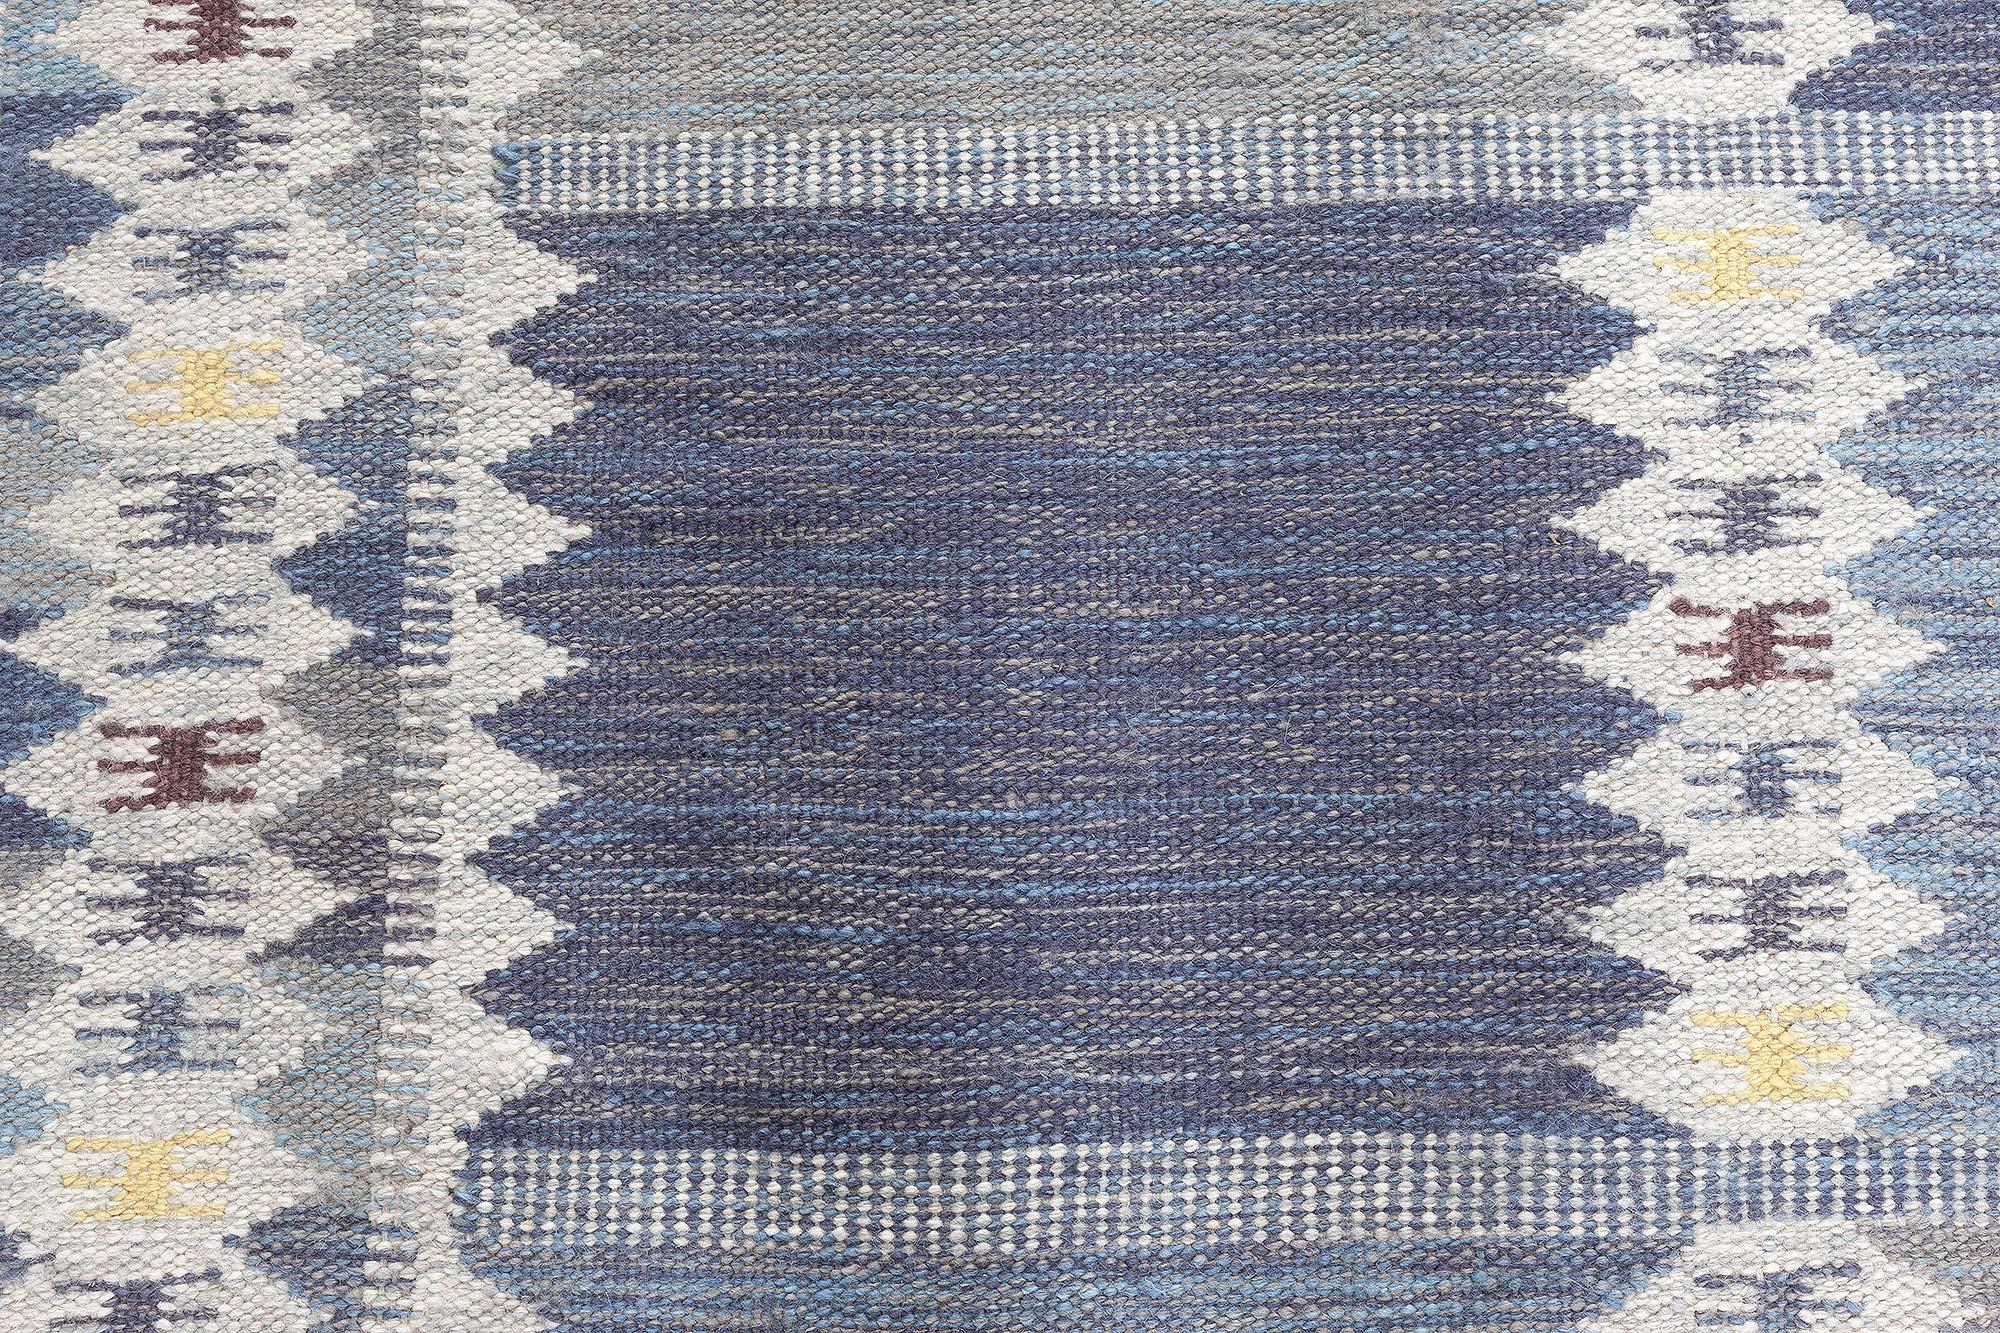 Modern Swedish Inspired Rug by Doris Leslie Blau
Size: 11'0